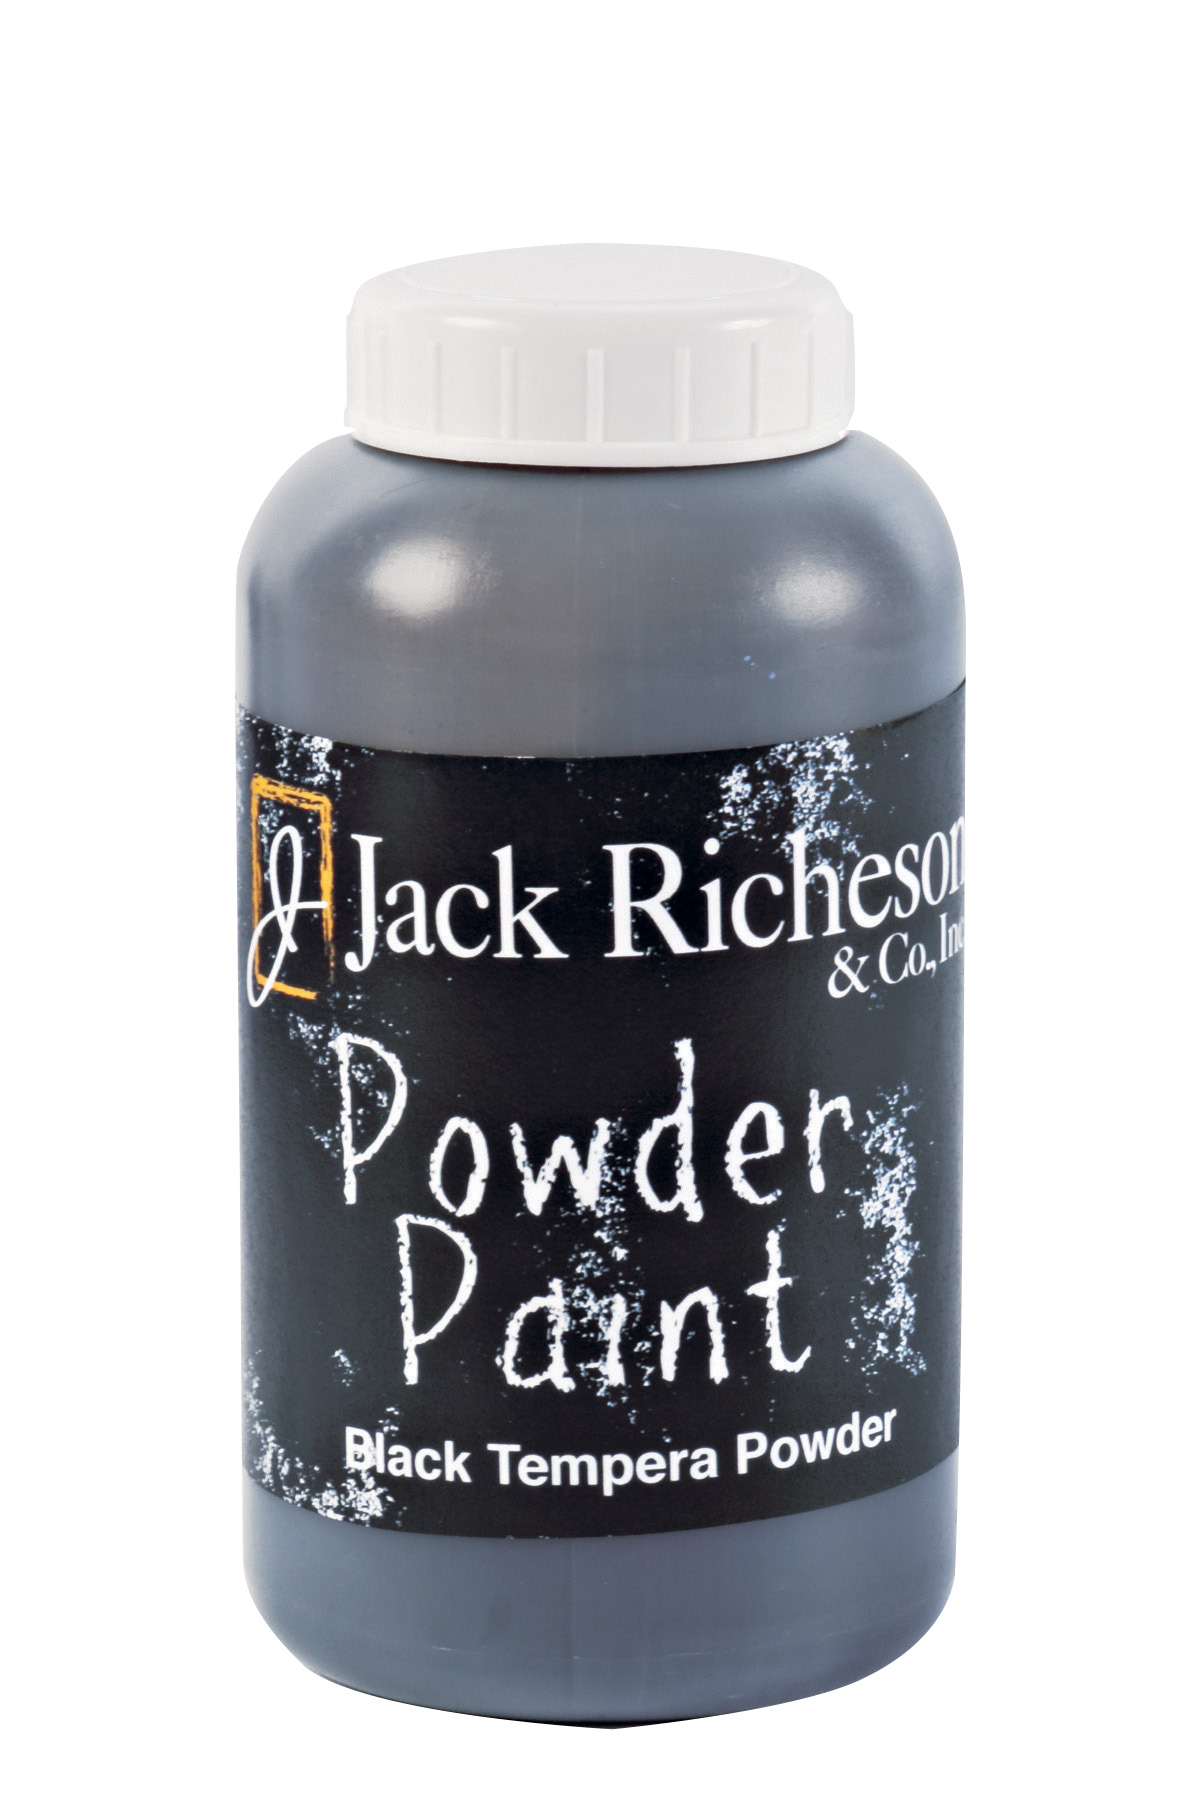 Jack Richeson Powdered Tempera Paint, 1 Pound, Black